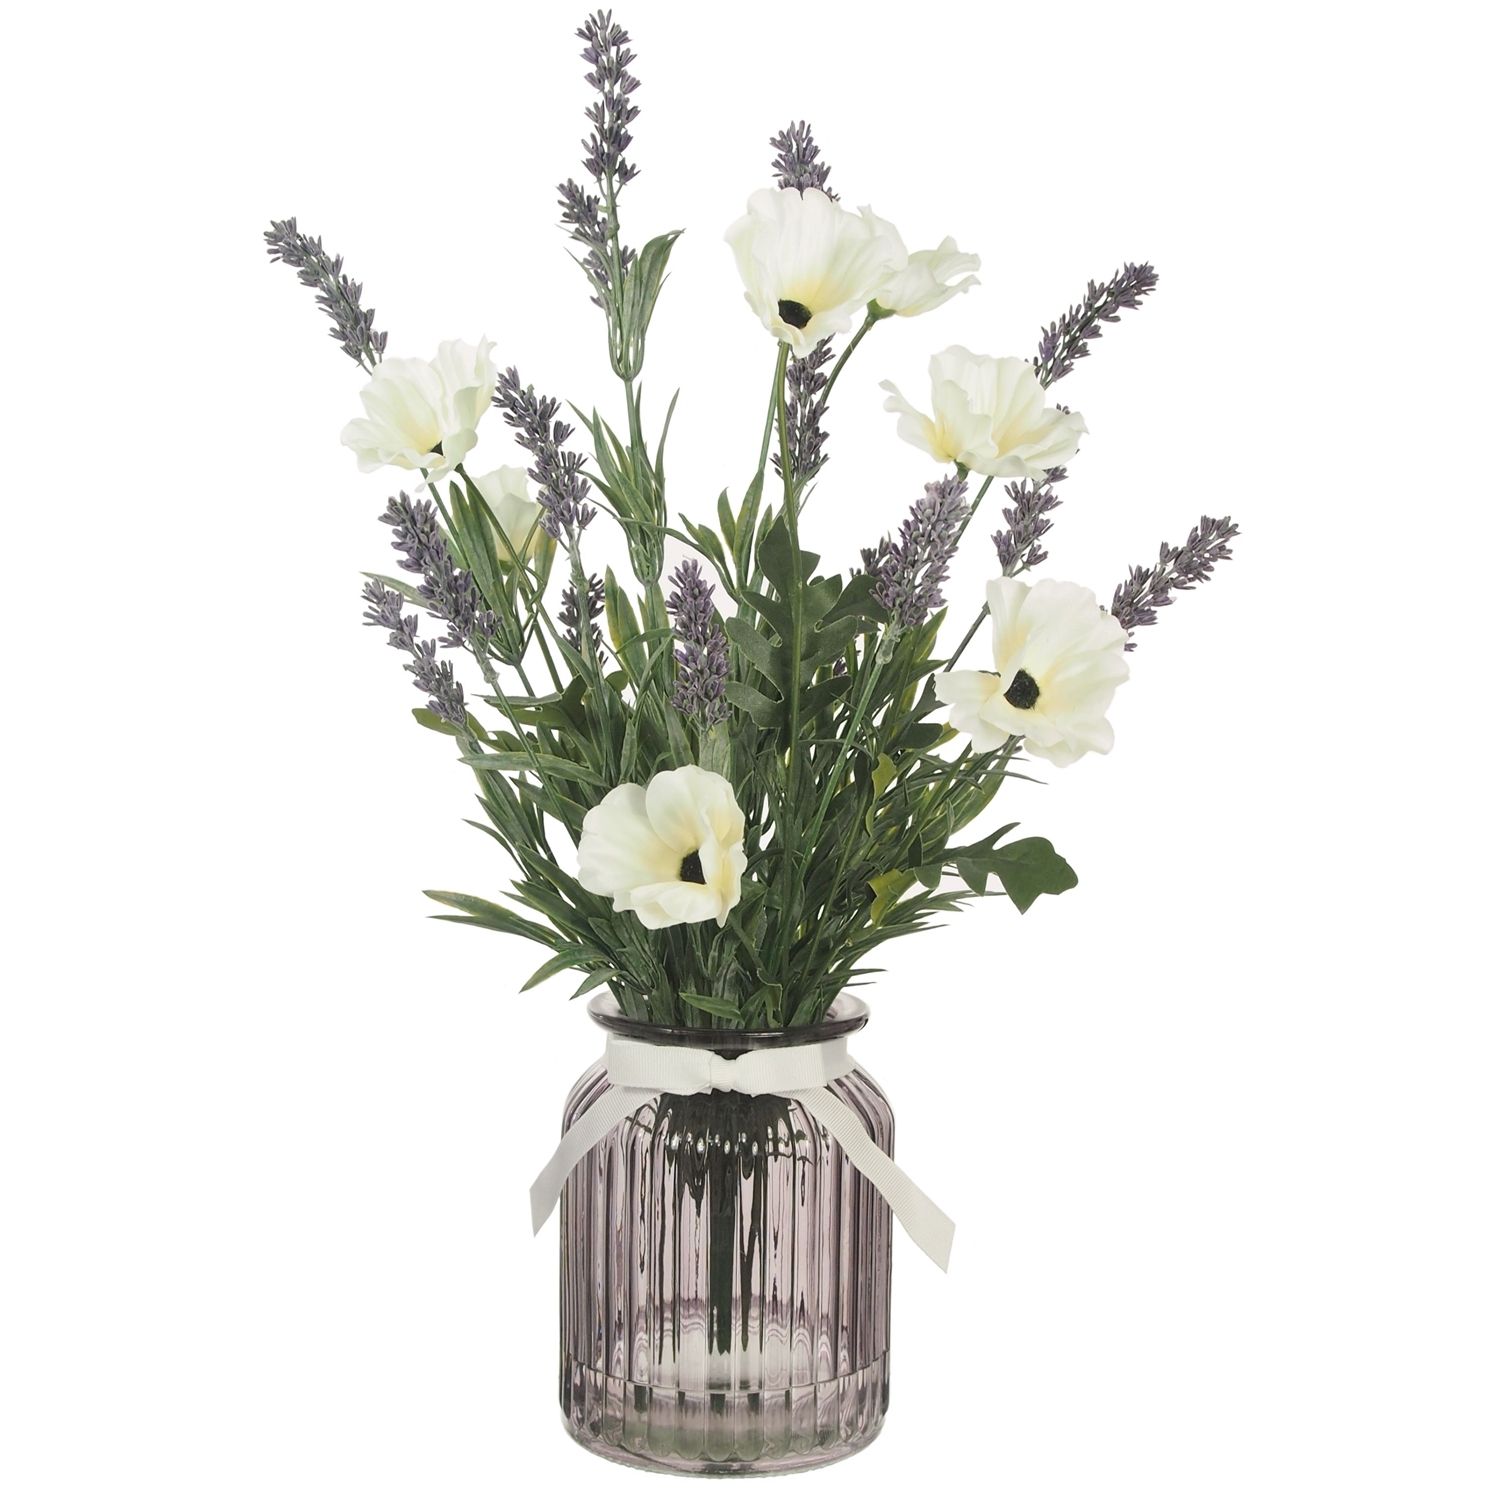 Cream Wild Poppy Artificial Flowers in Jar Image